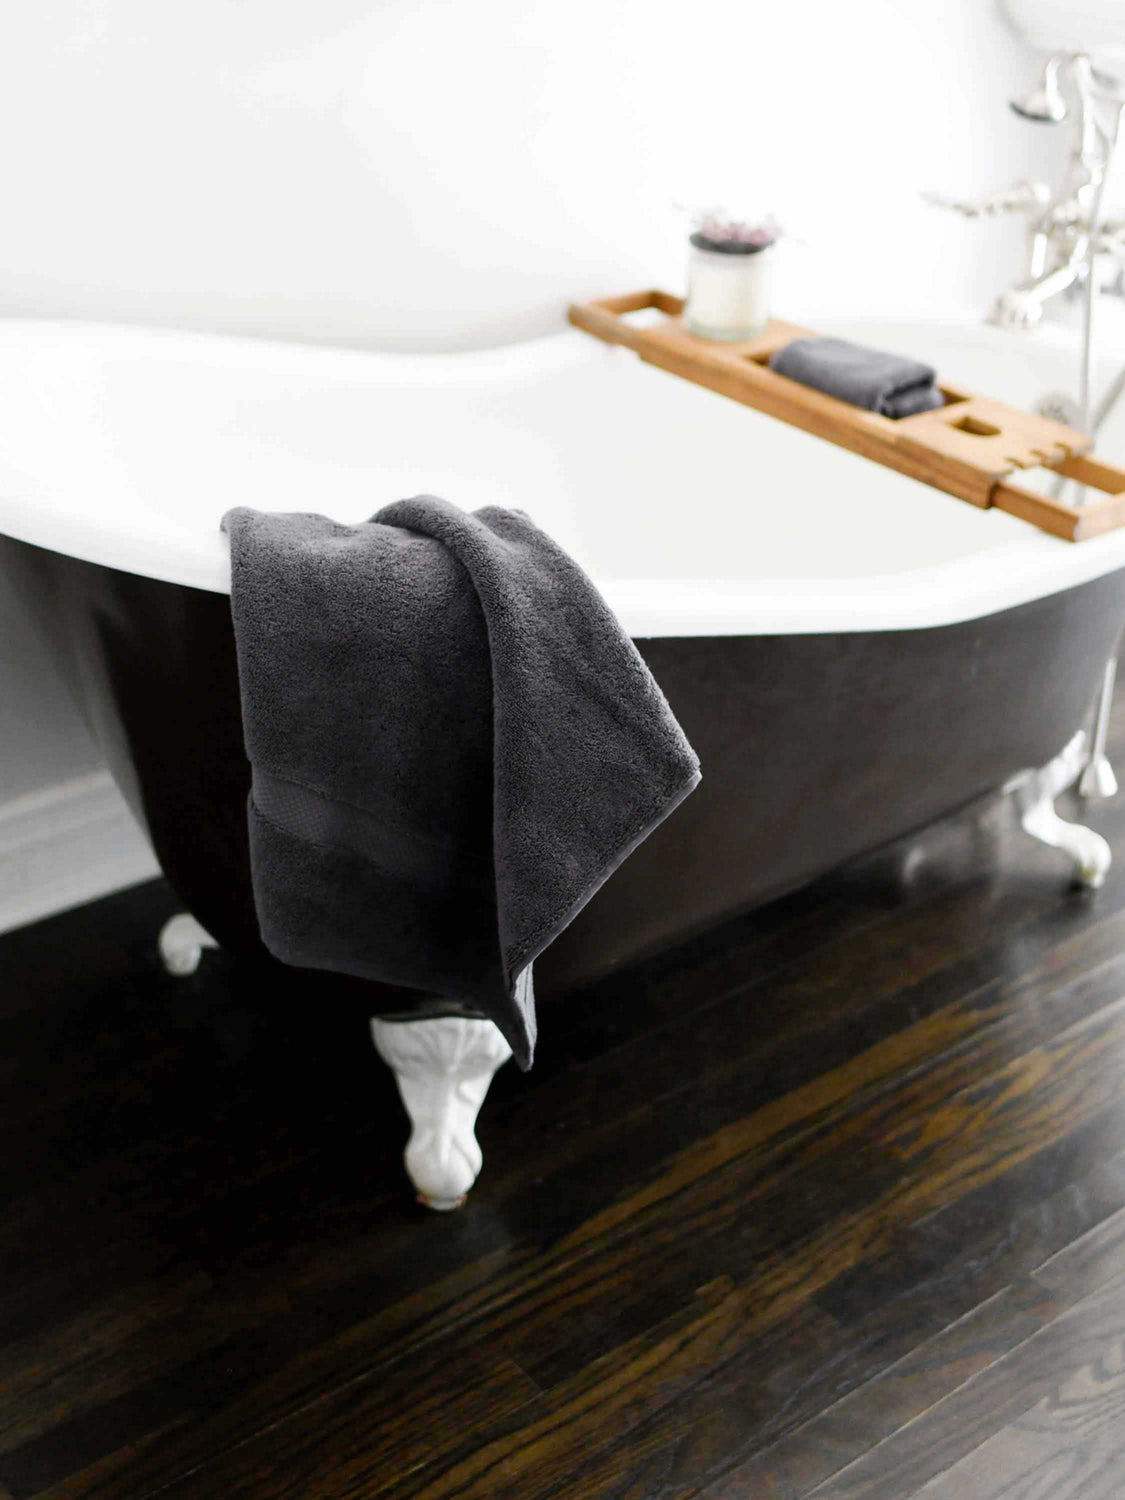 A dark gray cotton bath towel draped over the edge of a bathtub.